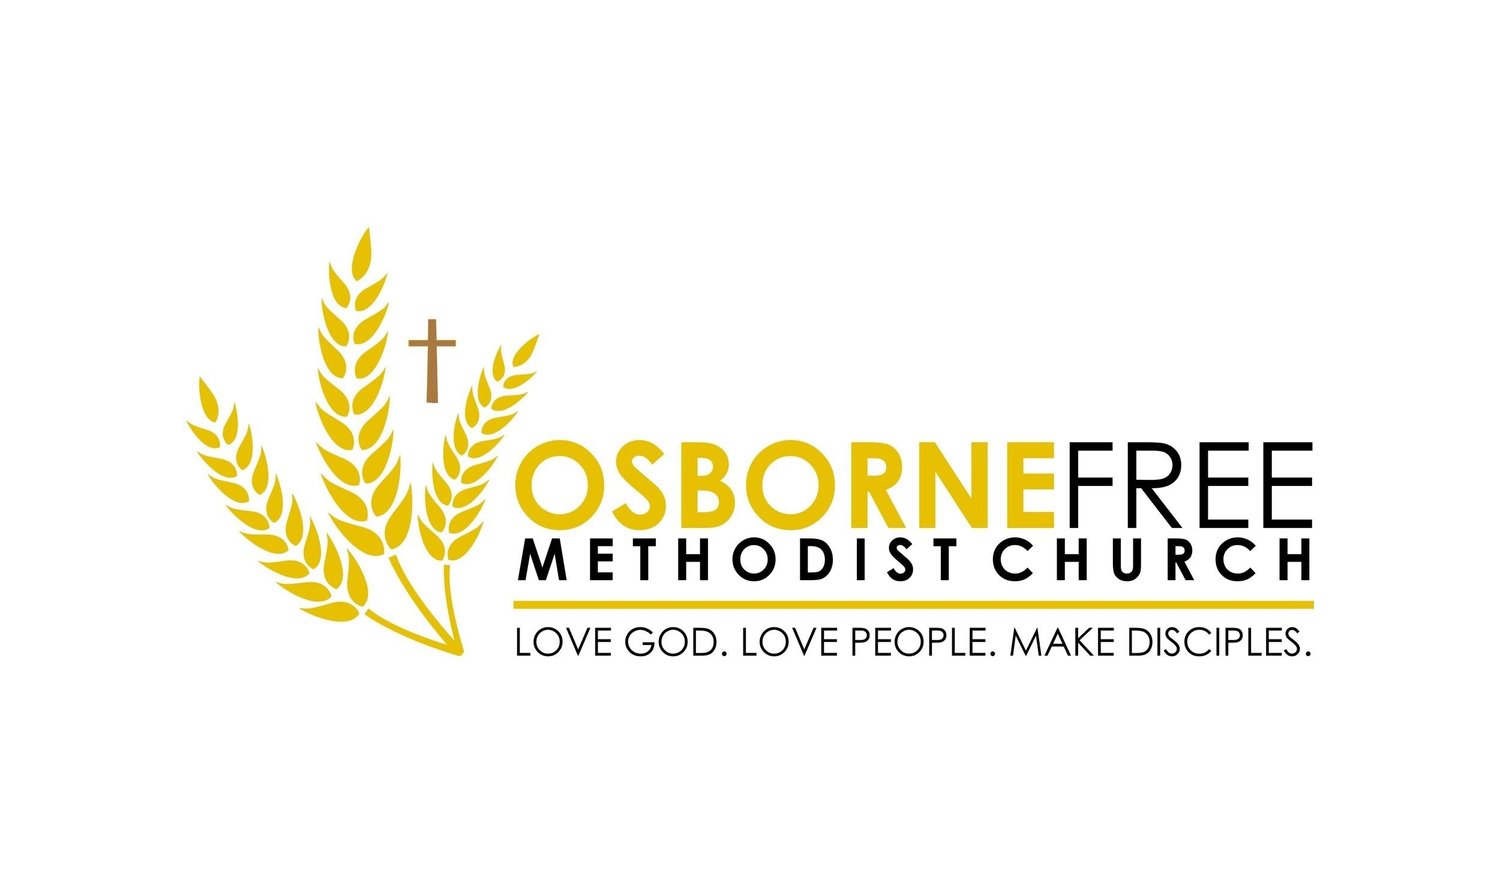 Osborne Free Methodist Church